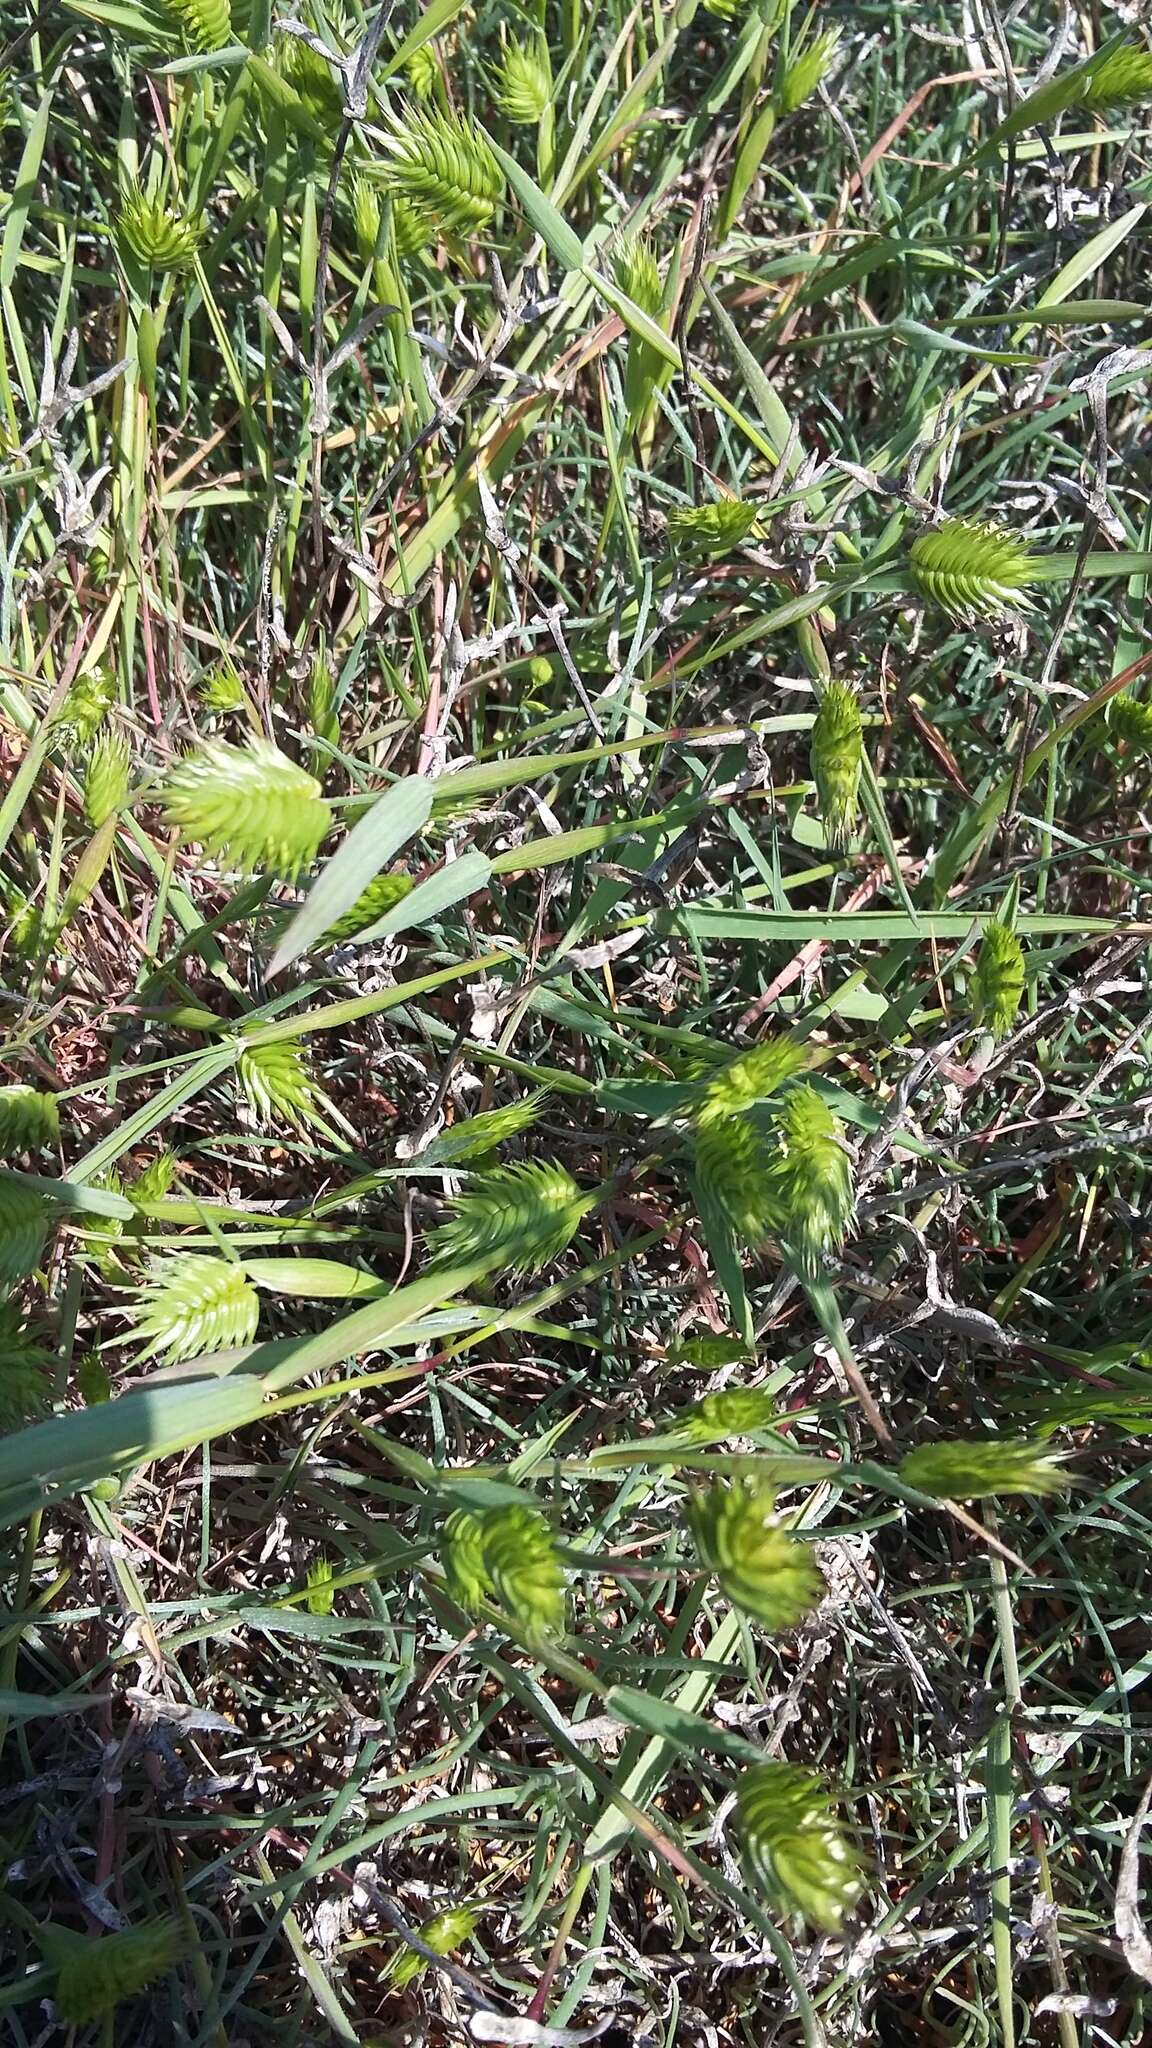 Image of annual wheatgrass